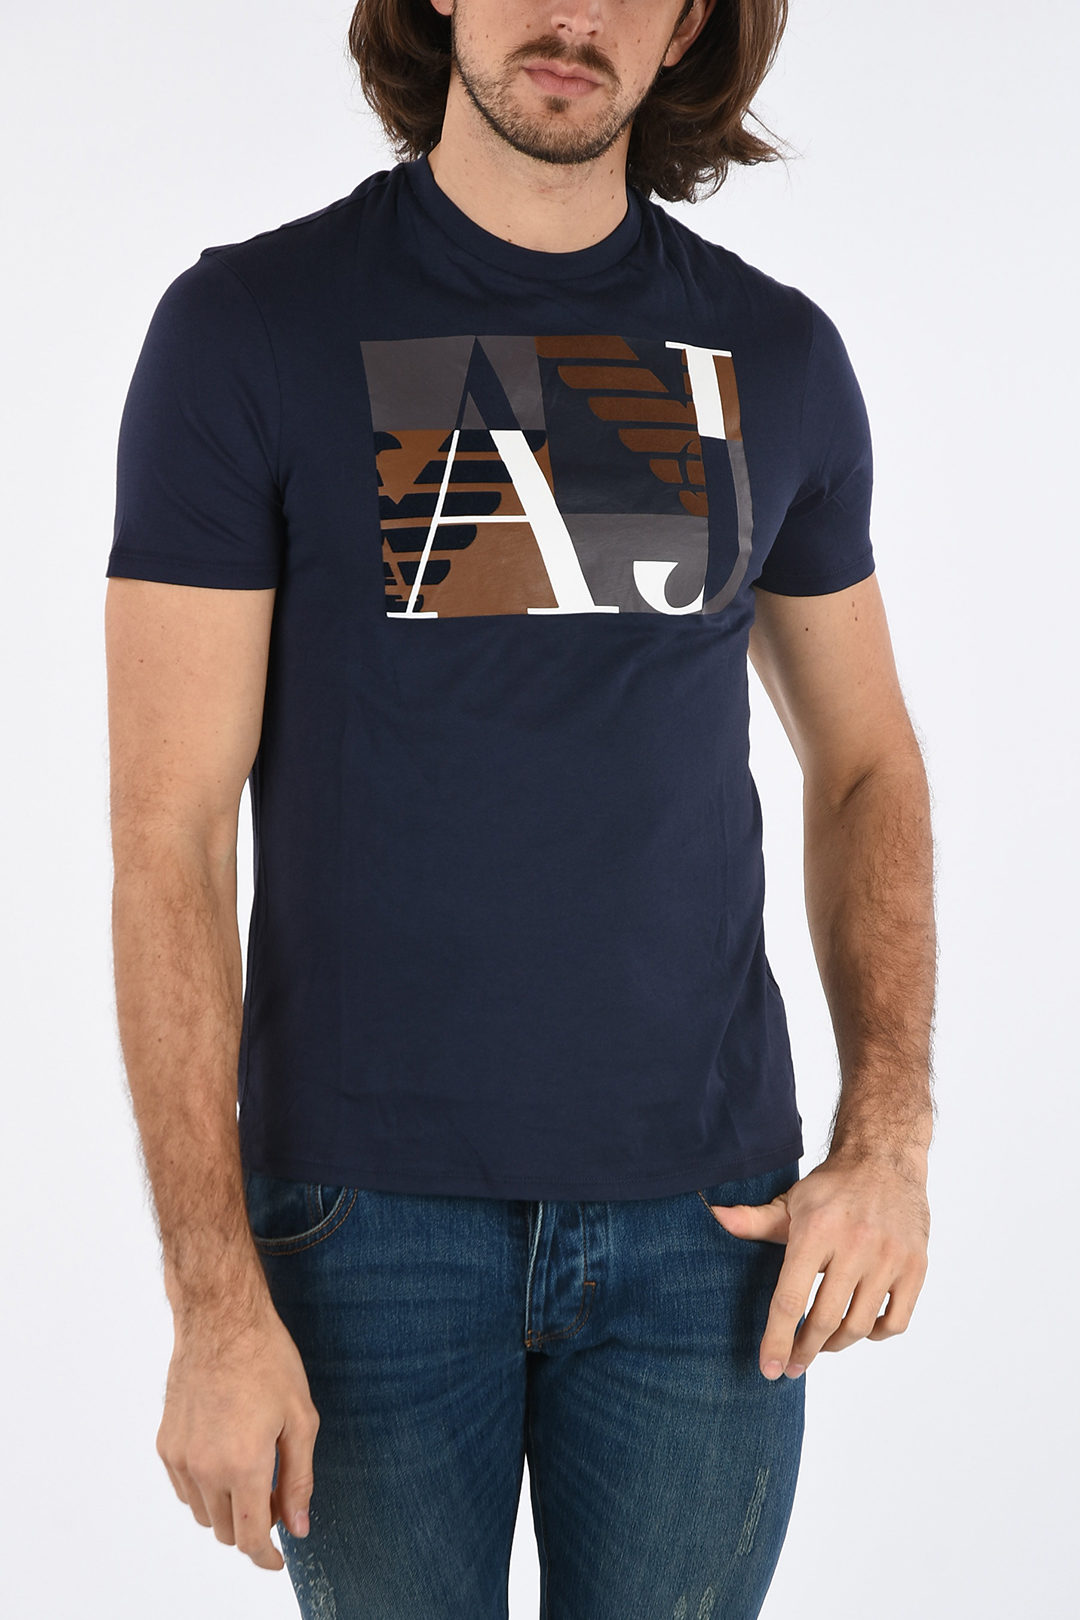 Slang Willen wagon Armani ARMANI JEANS T-shirt with Print men - Glamood Outlet